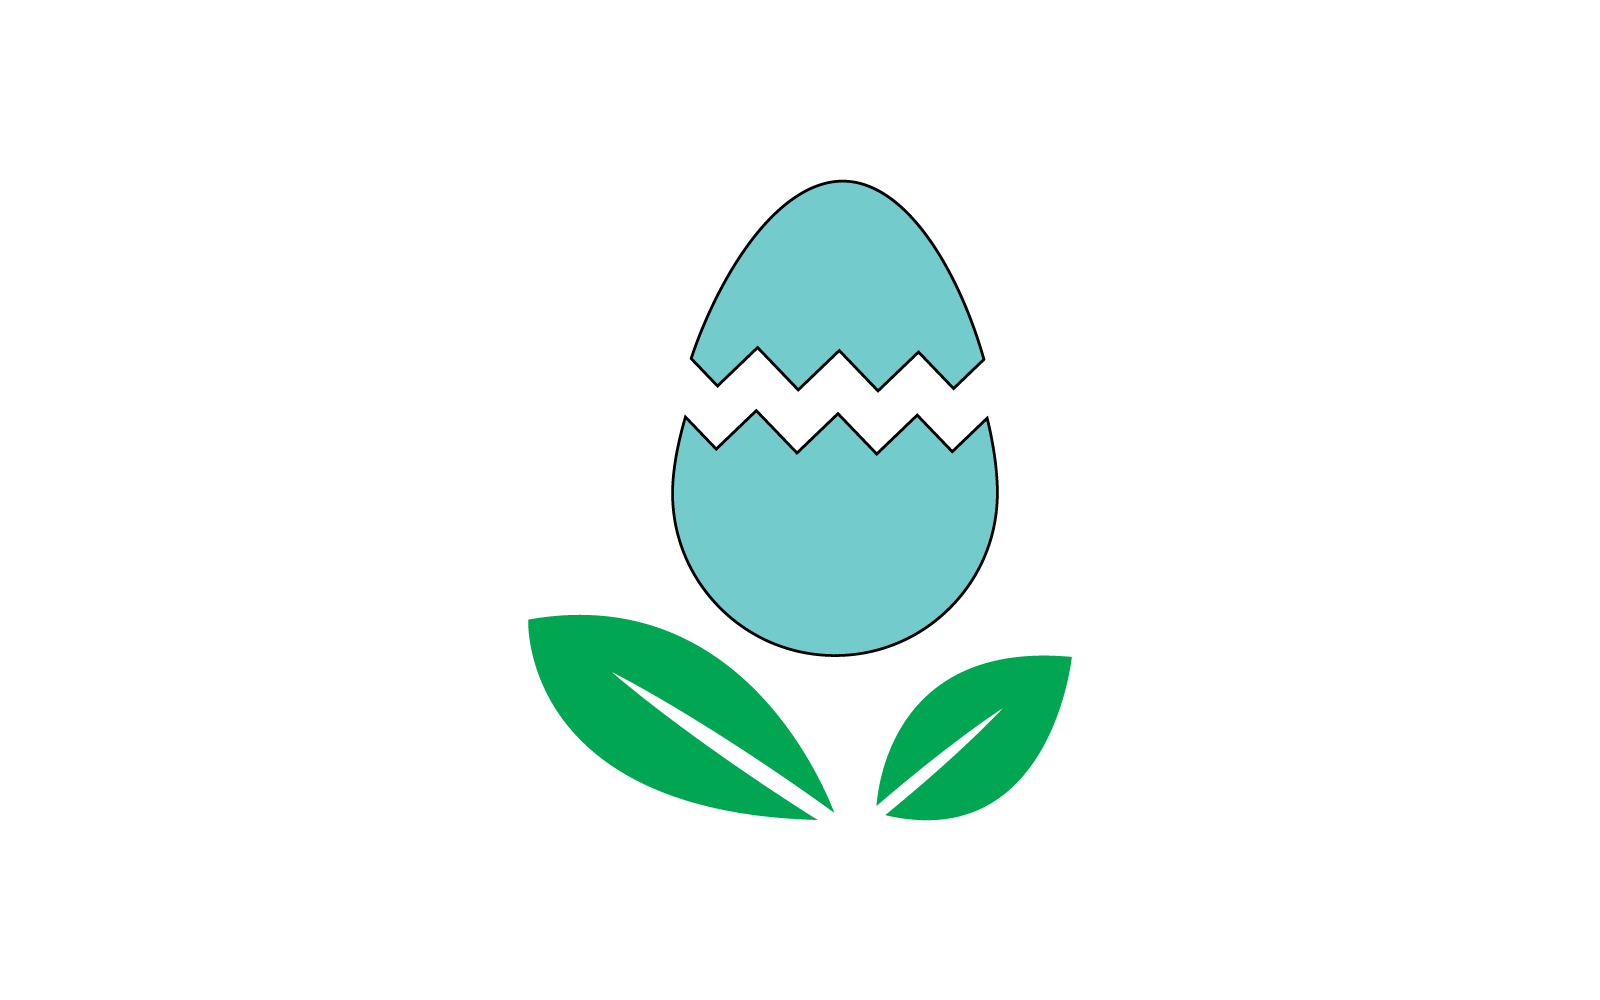 Egg illustration vector design template